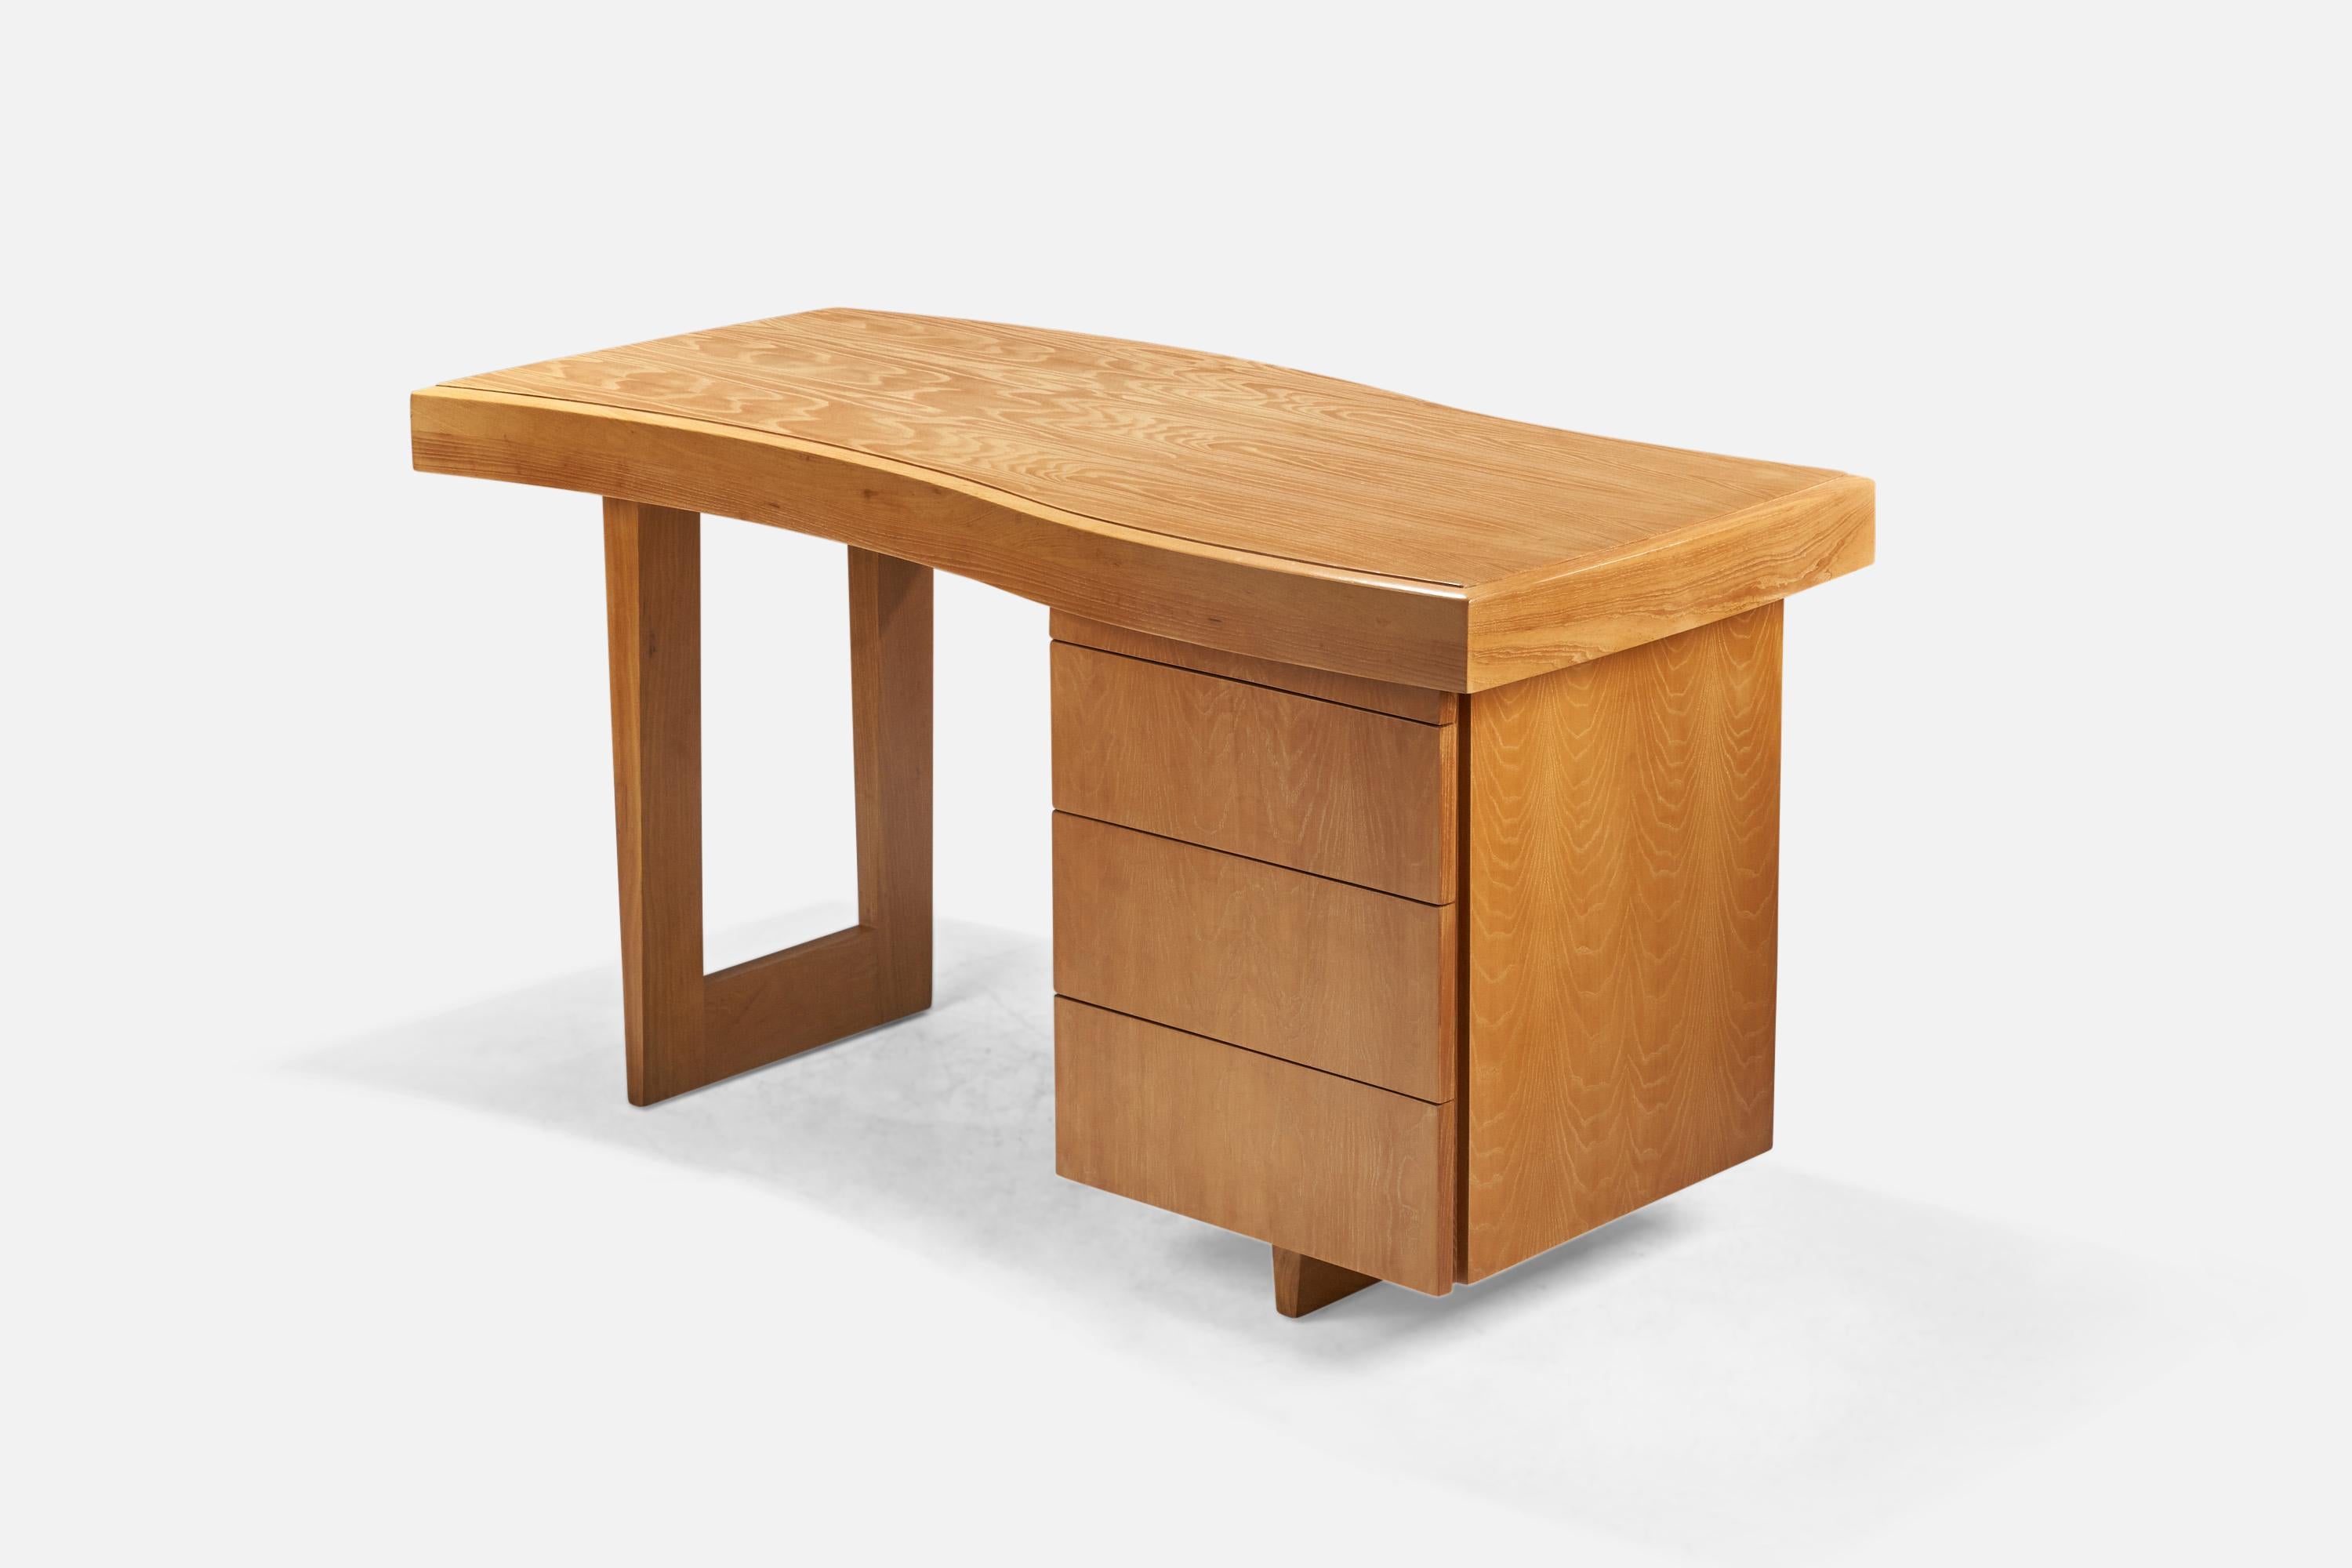 A freeform oak desk designed by Paul Laszlo and produced by Brown Saltman, USA, 1940s.